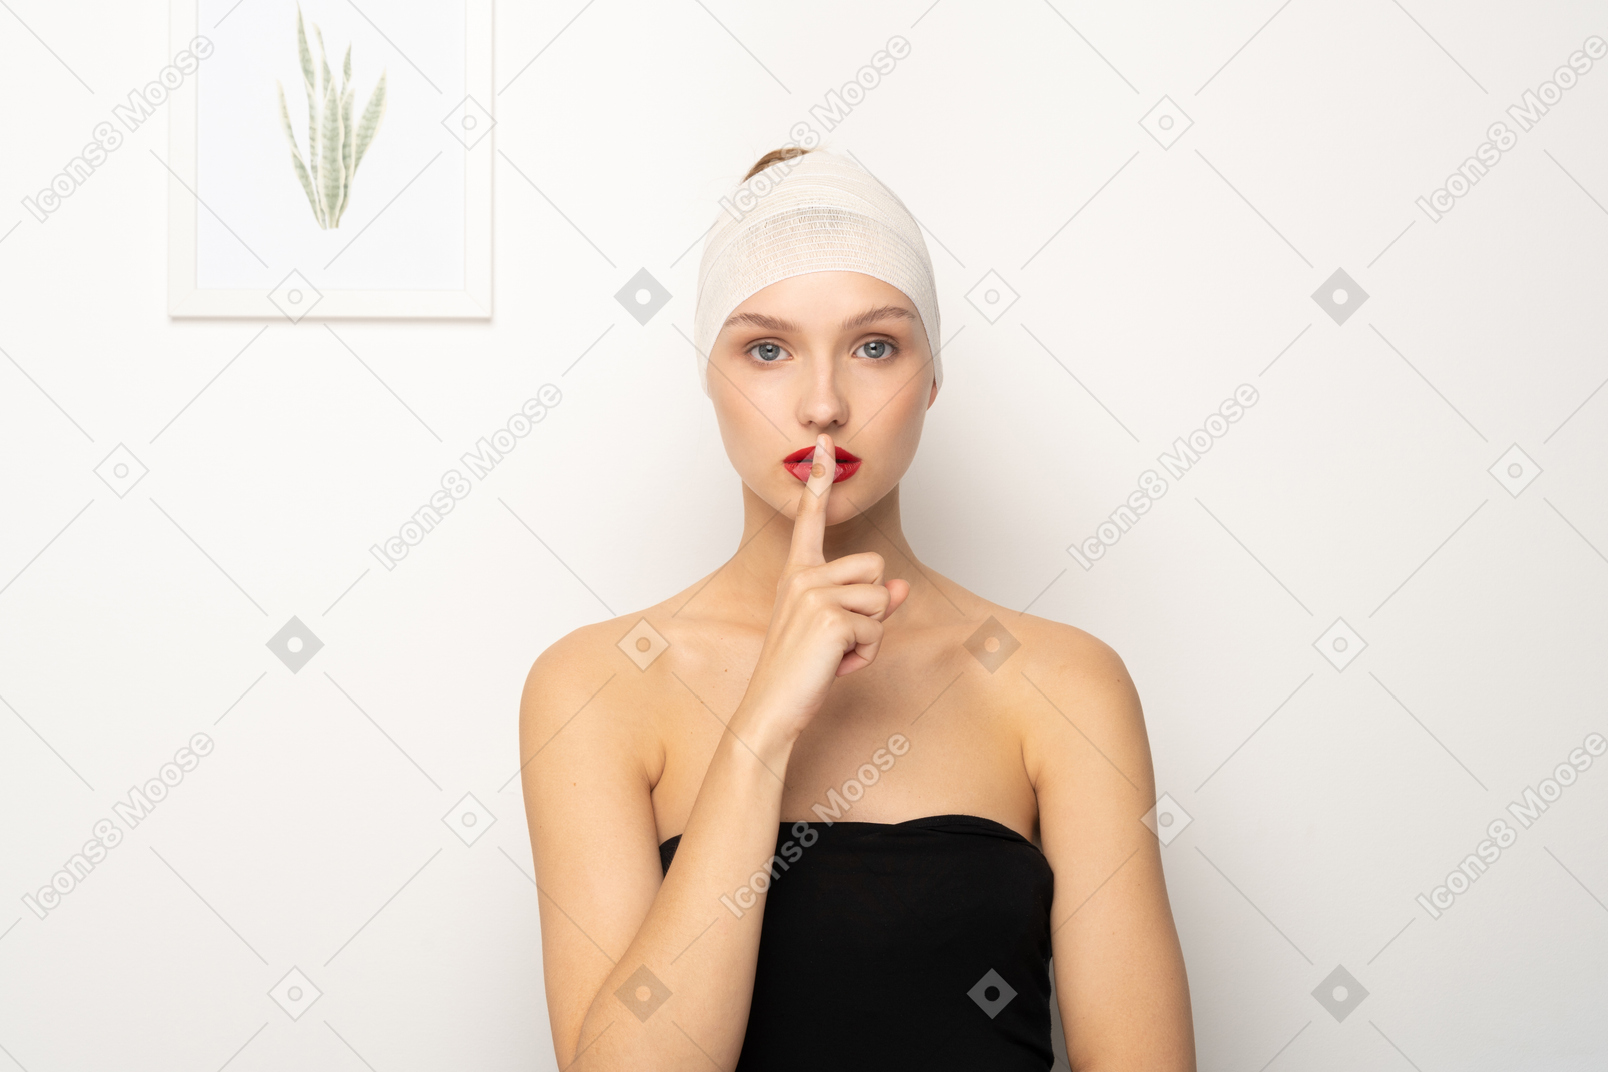 Young woman making shush gesture